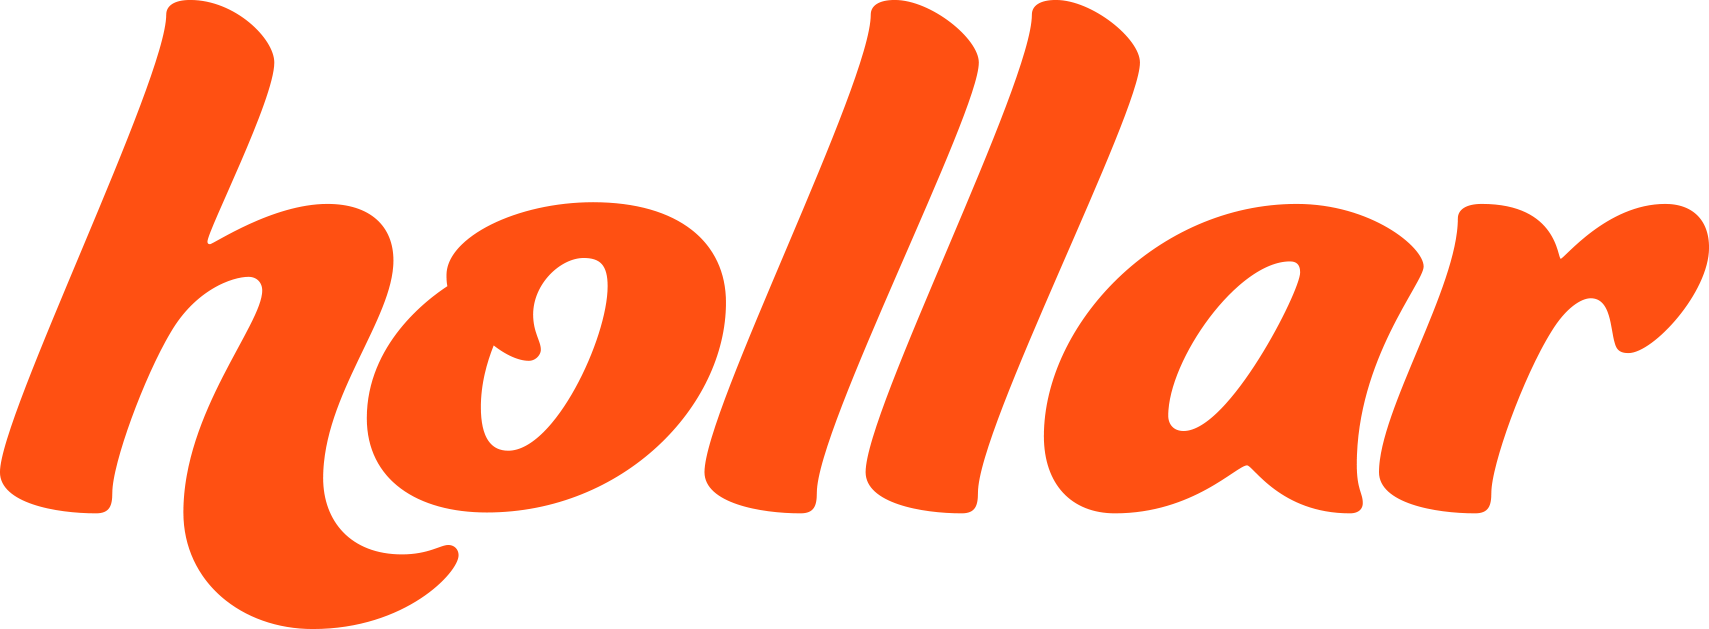 Hollar Logo - Home • Hollar Blog